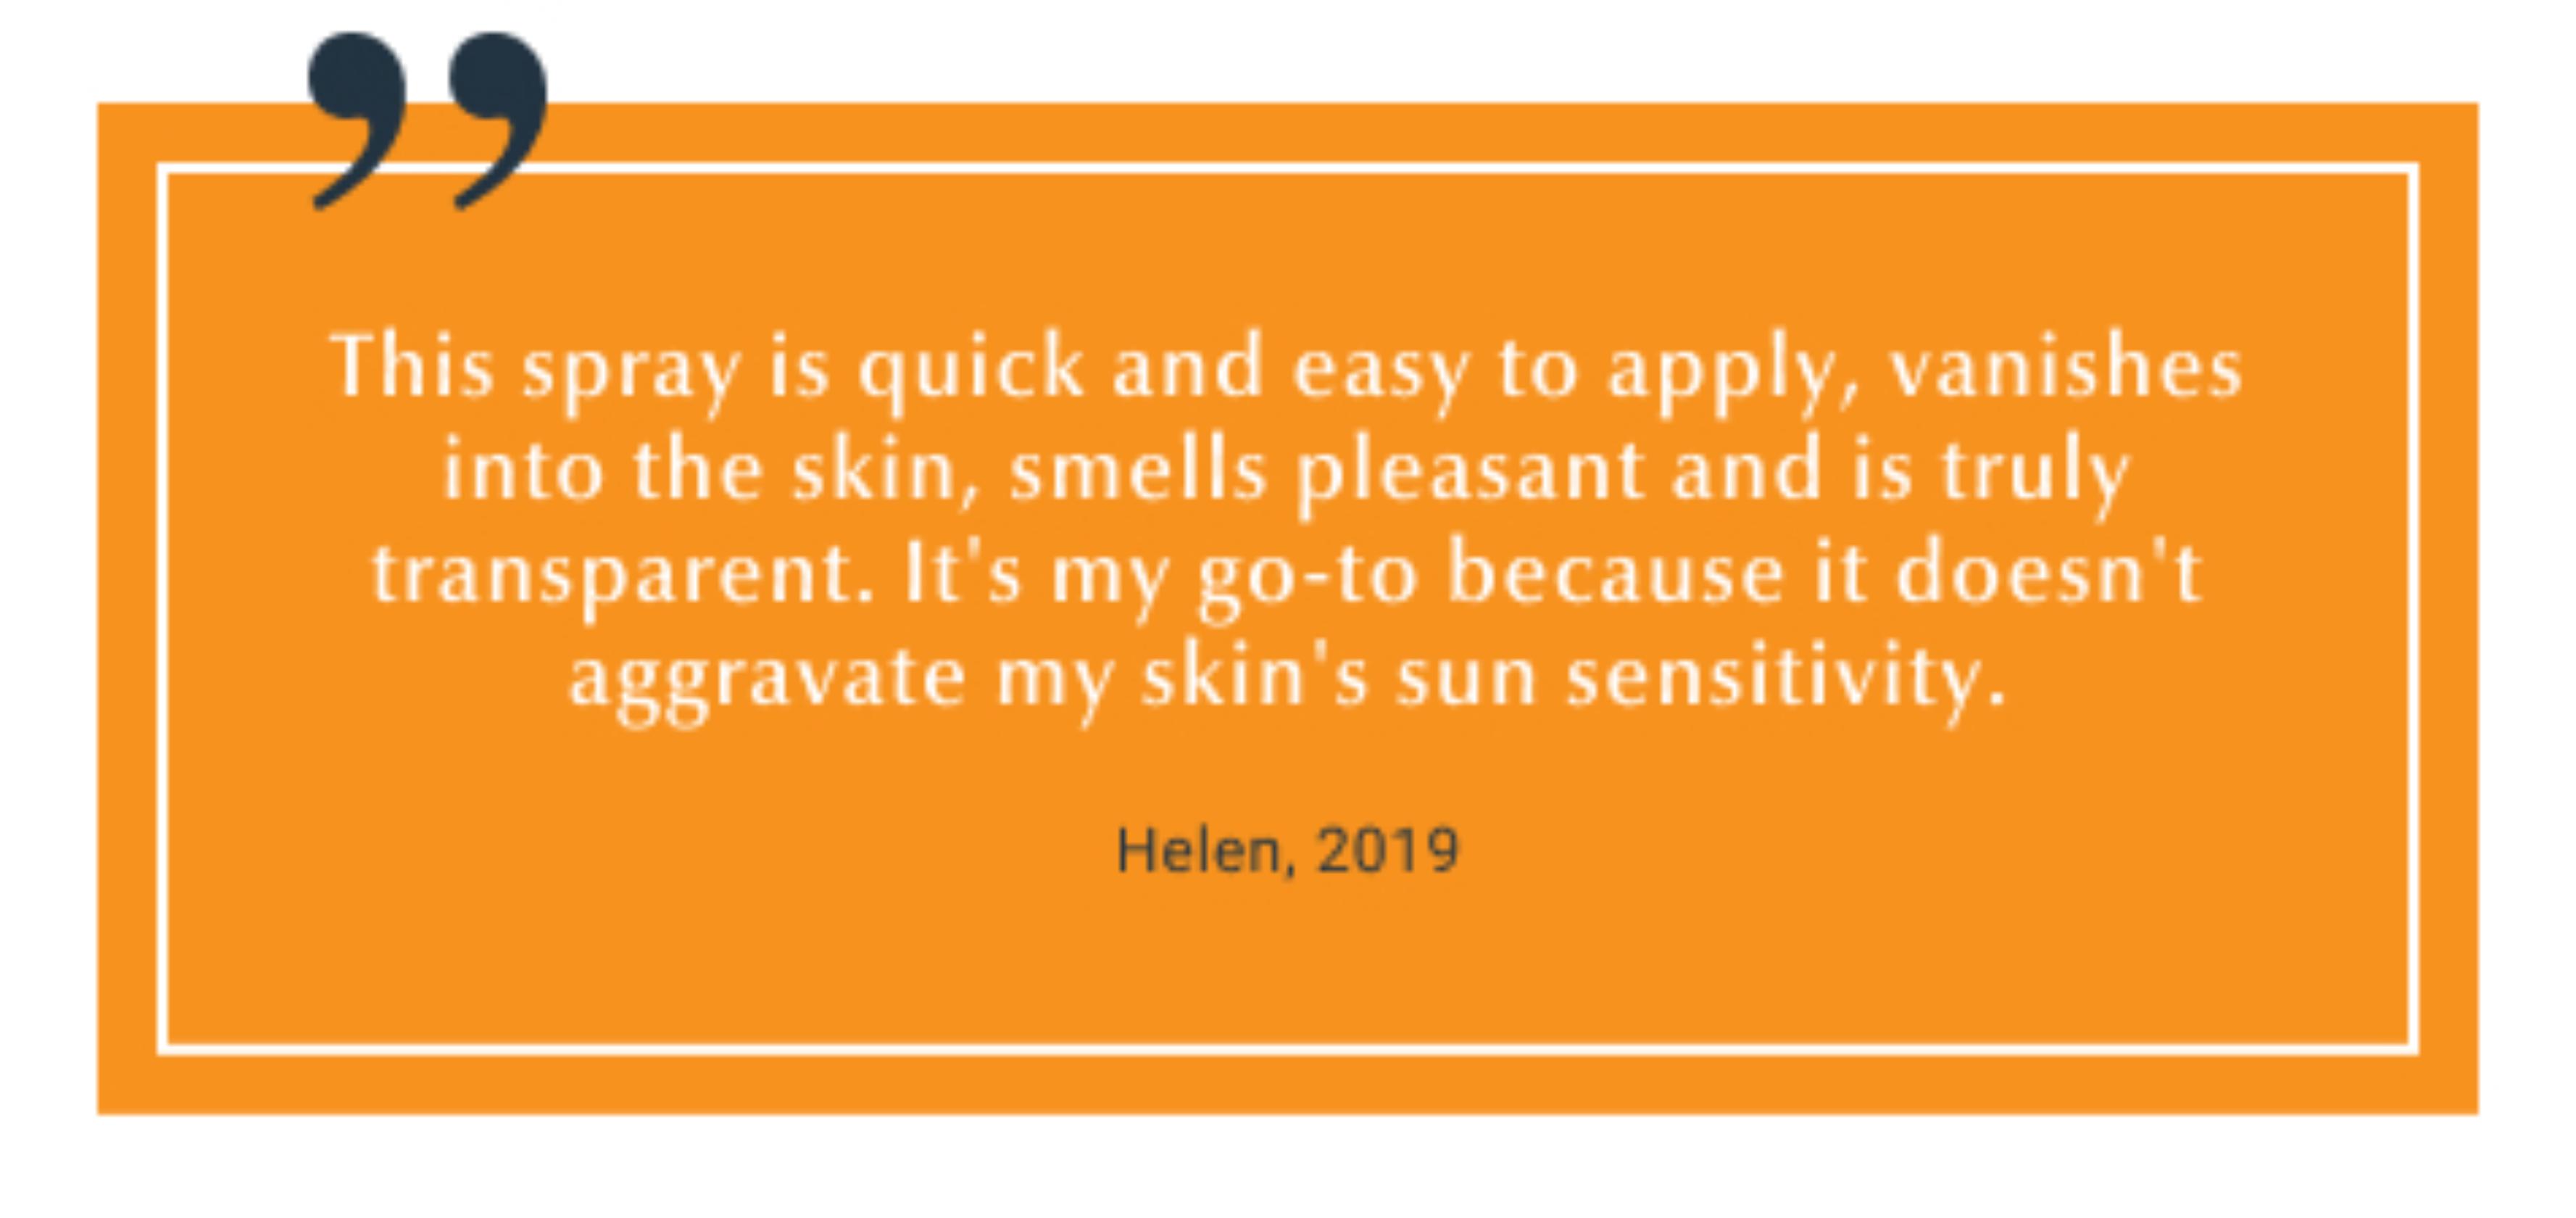 Eucerin Sun Sensitive Protect Spray Toucher Sec Transparent SPF50 200 ml